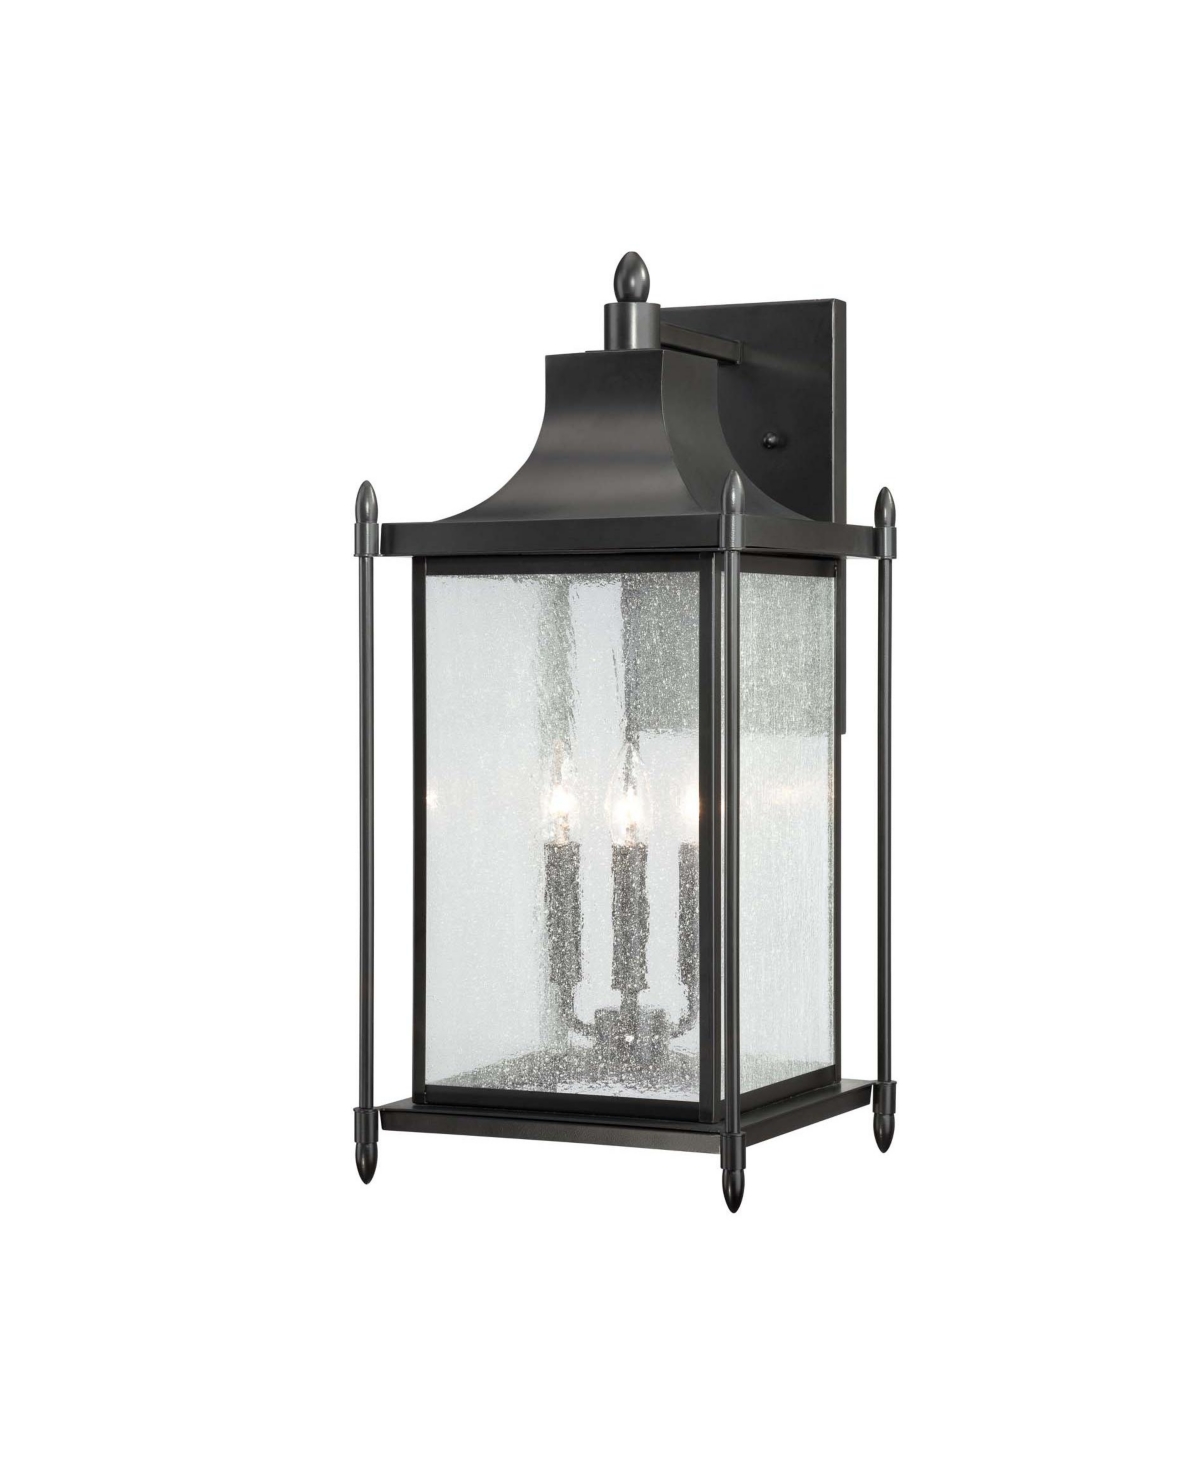 Dunnmore 3-Light Outdoor Wall Lantern in Black - Black